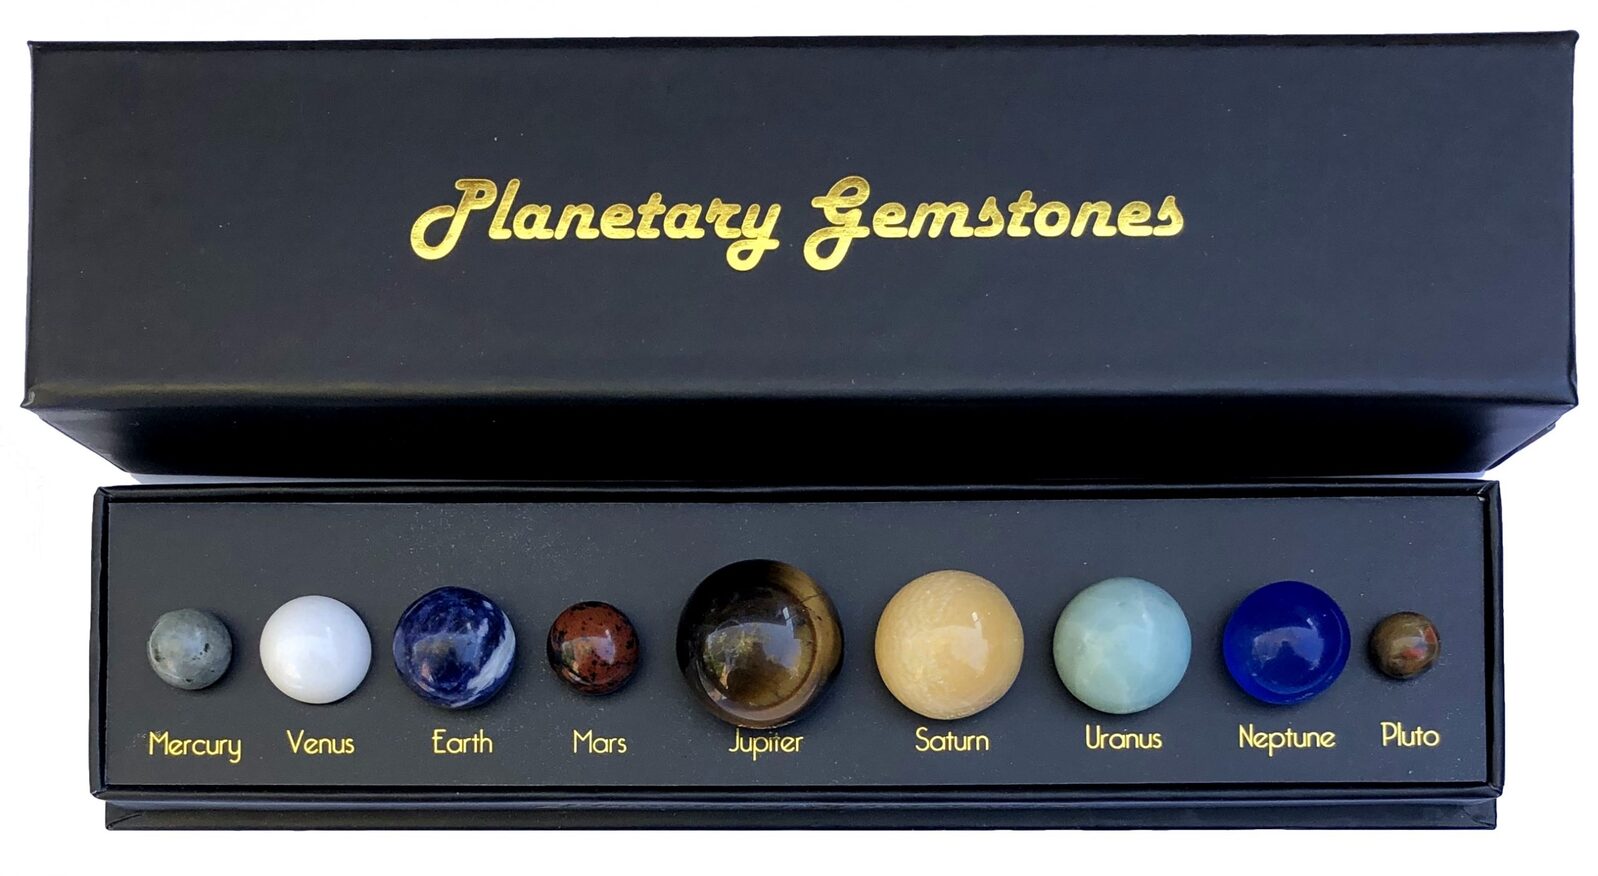 Planetary Gemstones image